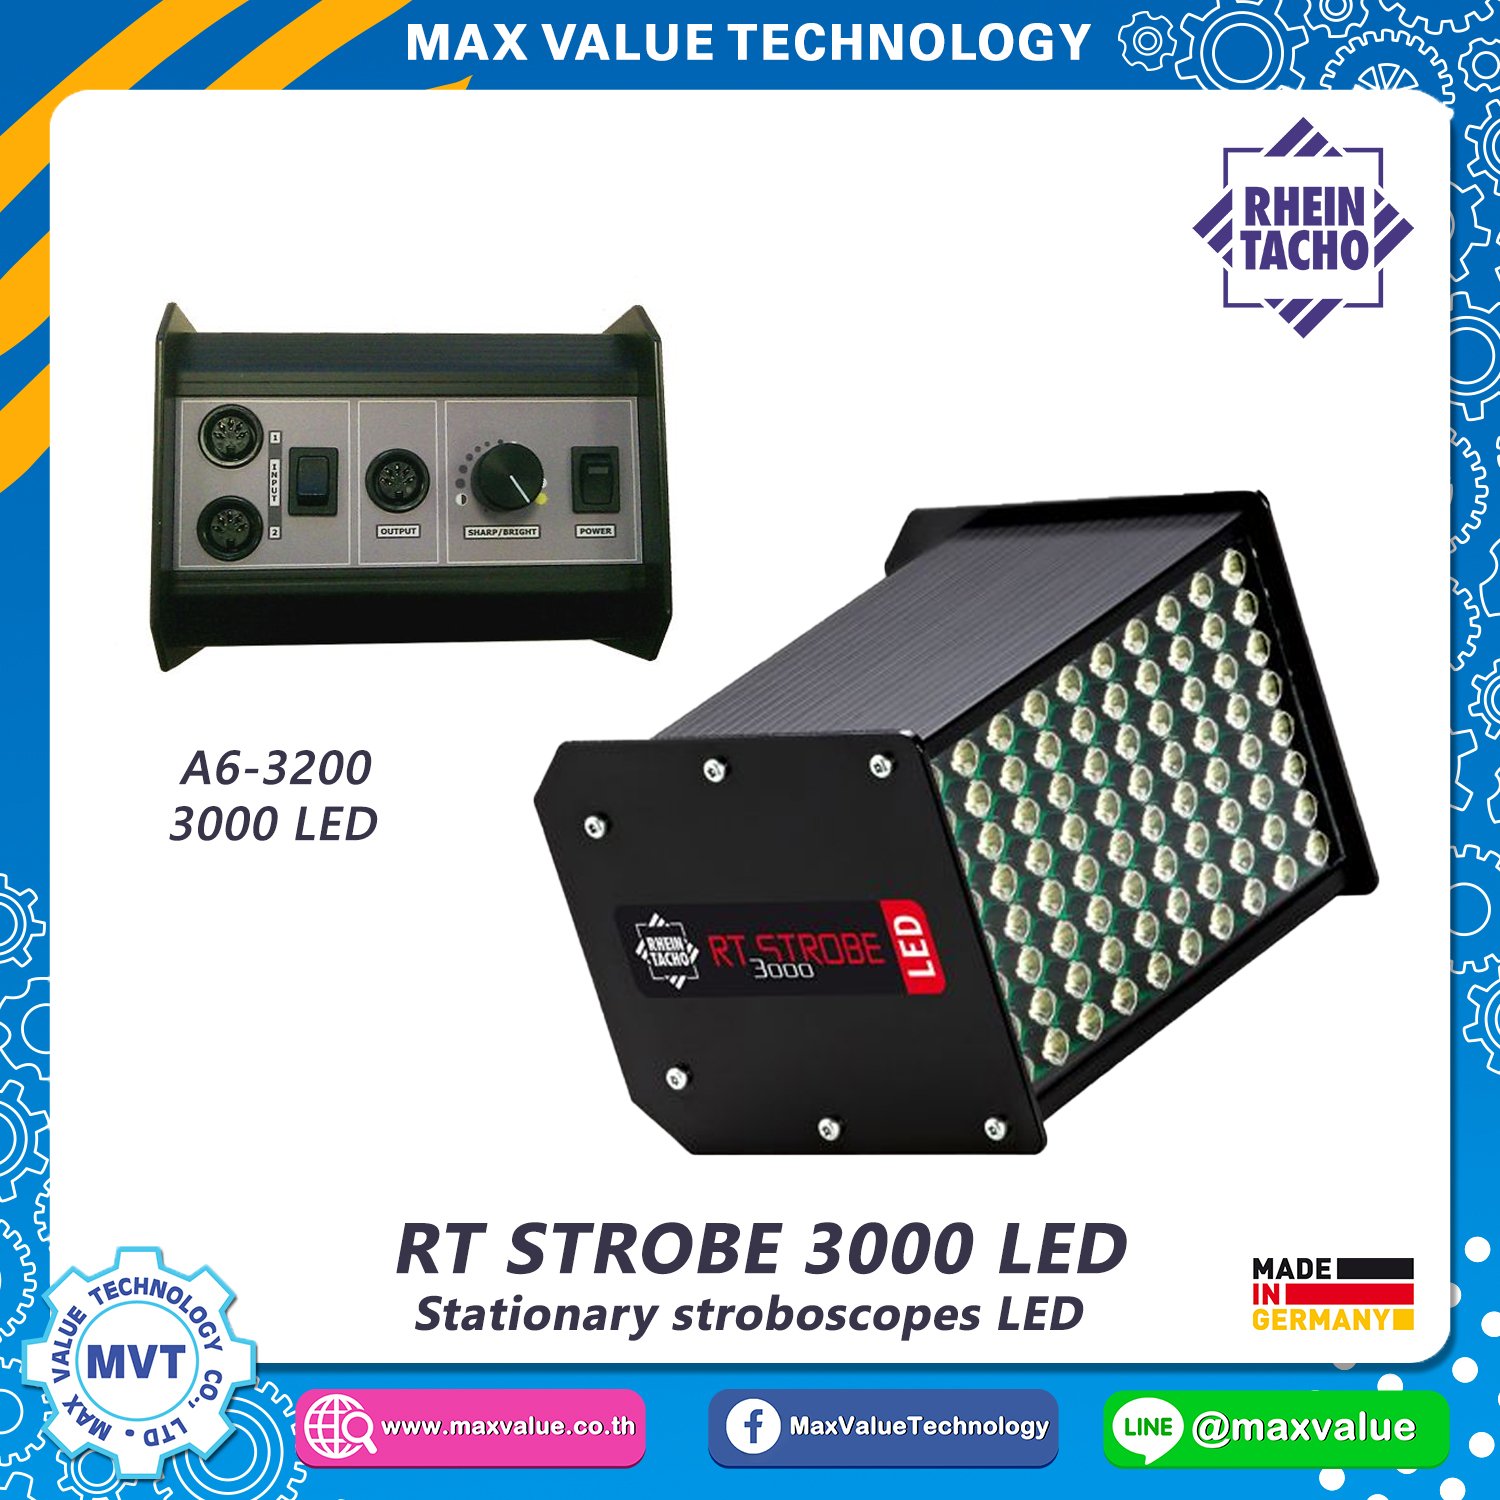 Stationary stroboscope RT STROBE 3000 LED